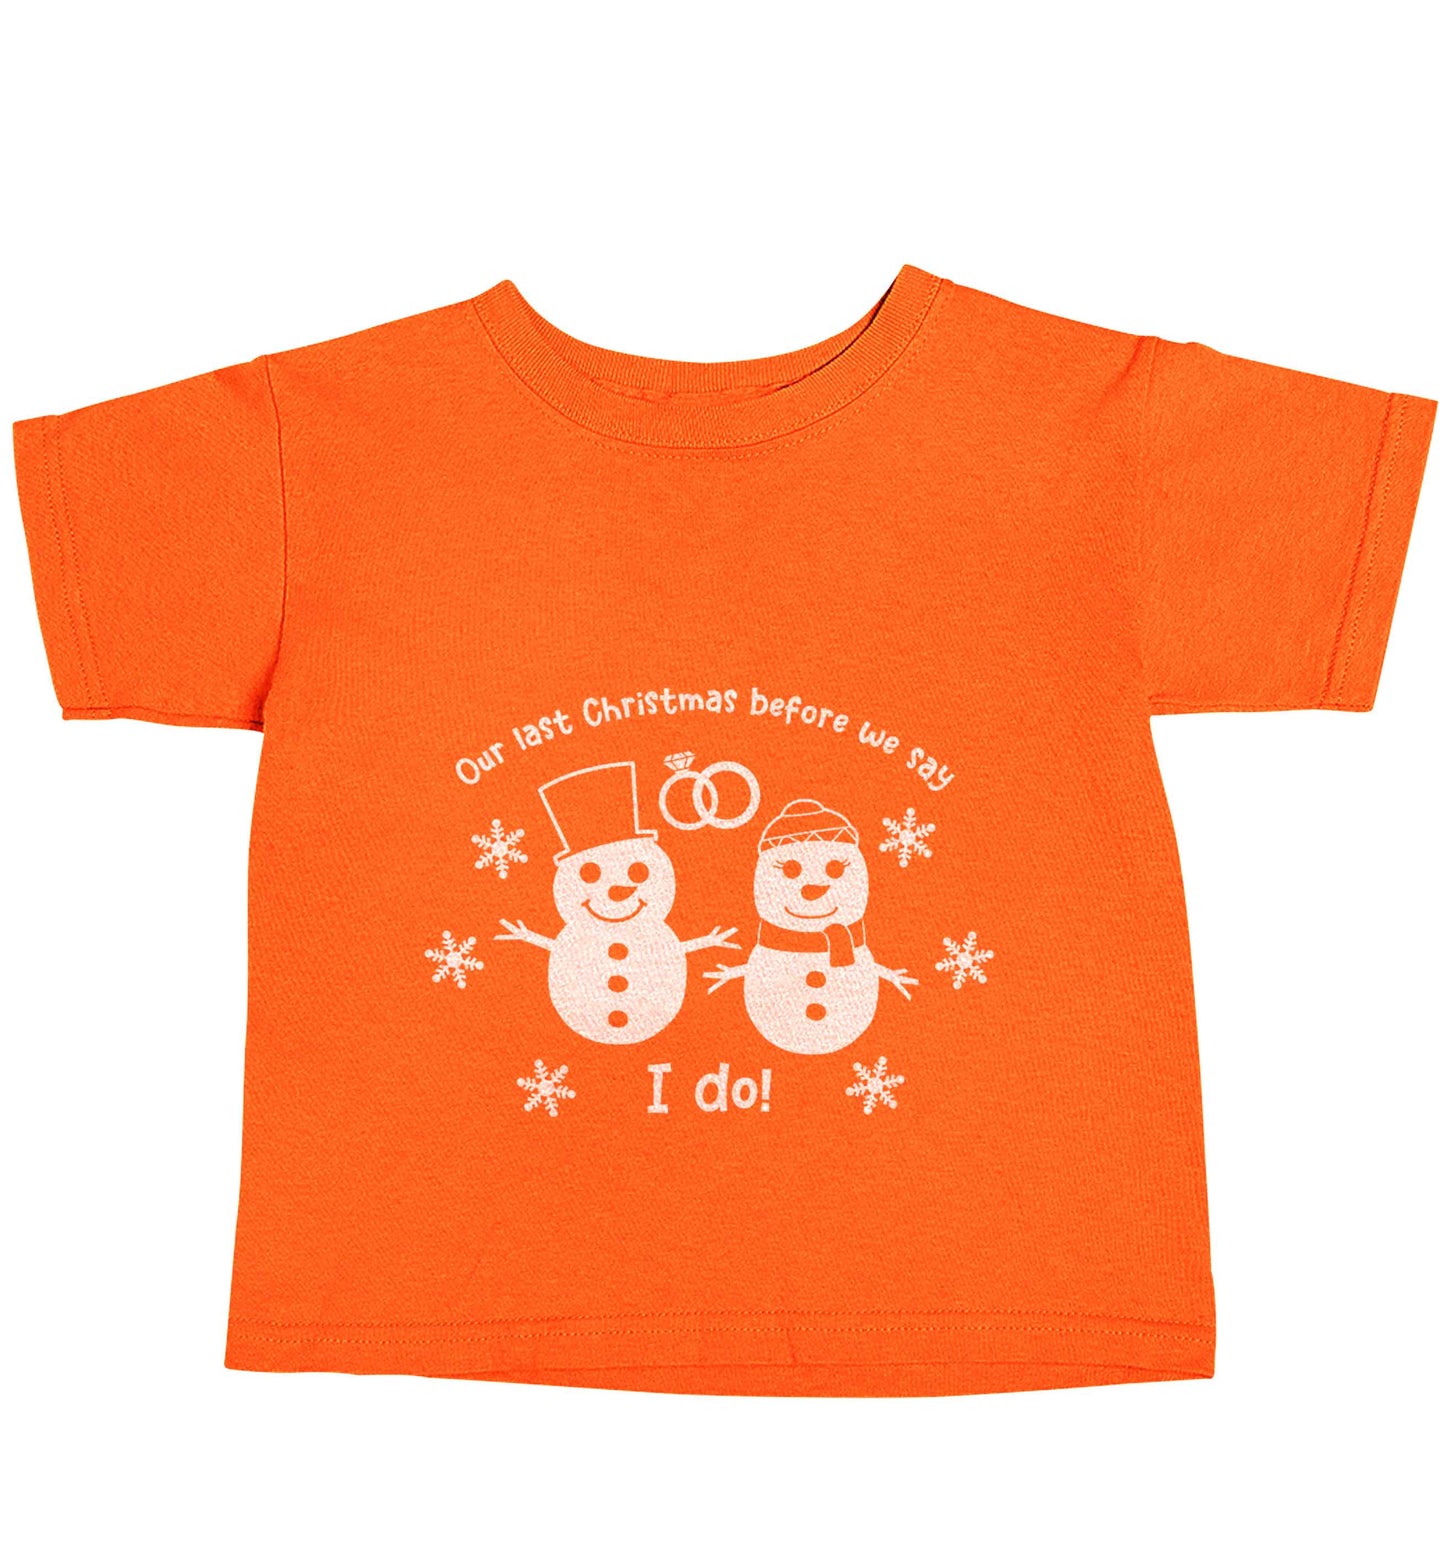 Last Christmas before we say I do orange baby toddler Tshirt 2 Years